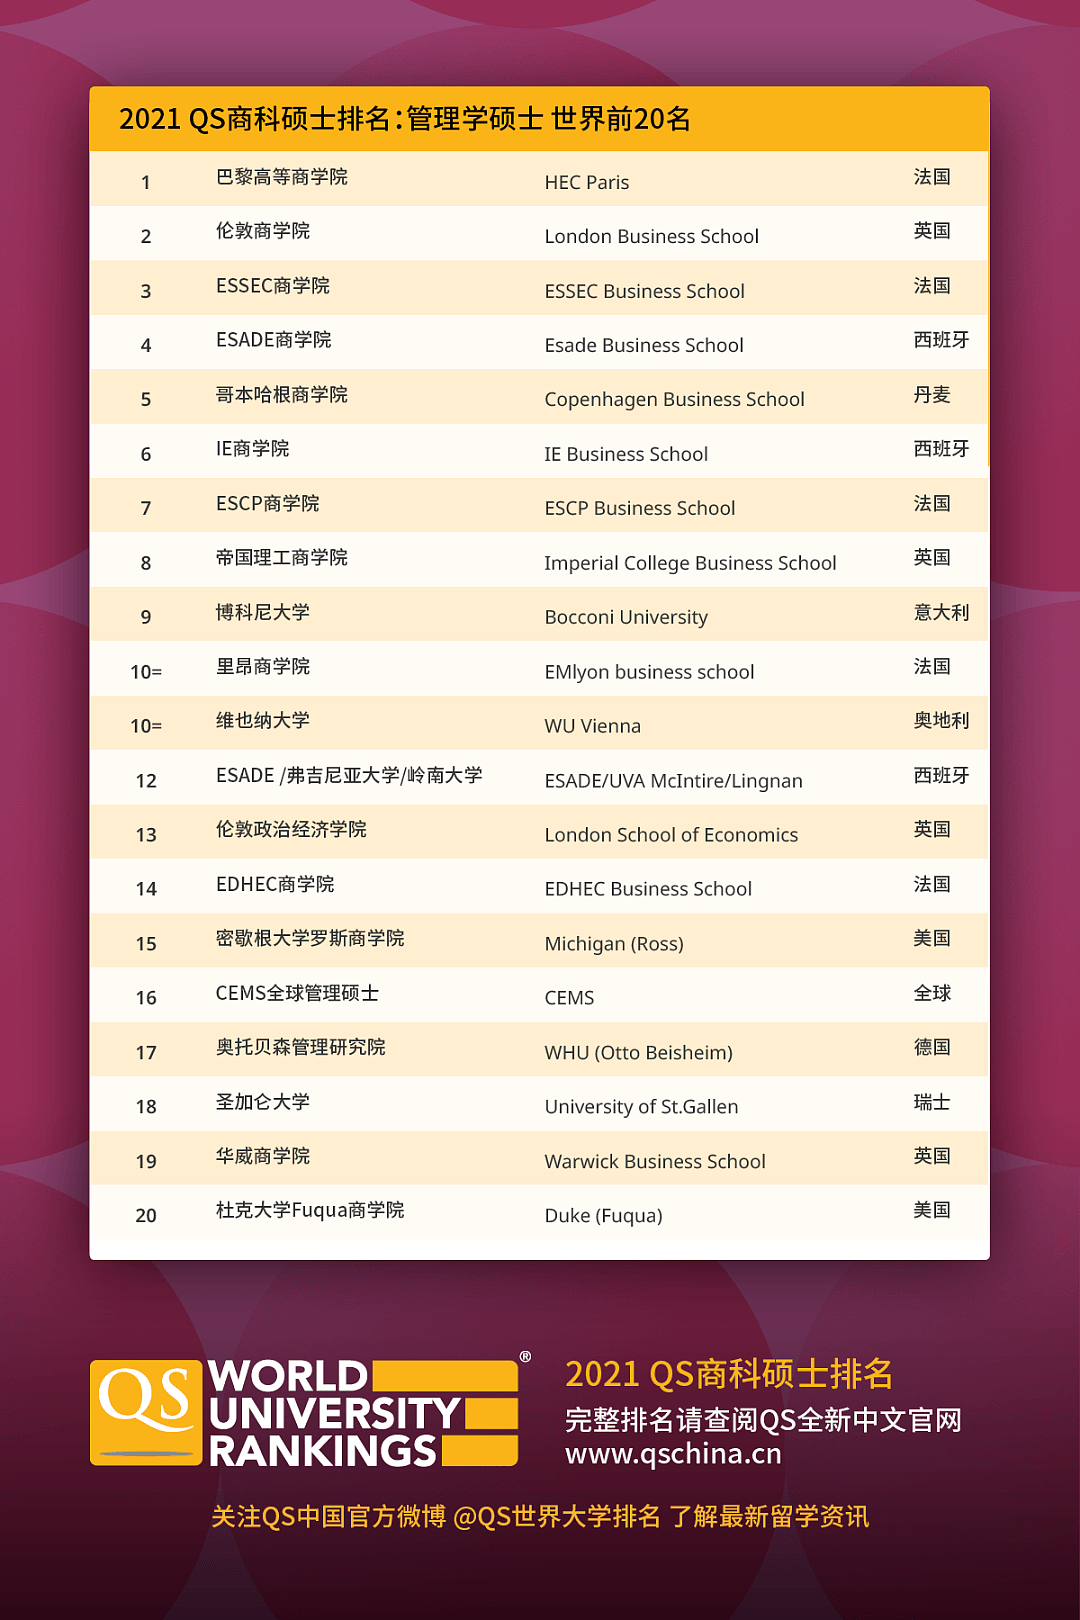 2021QS全球商科硕士院校排名发布！澳洲多所高校榜上有名（组图） - 5